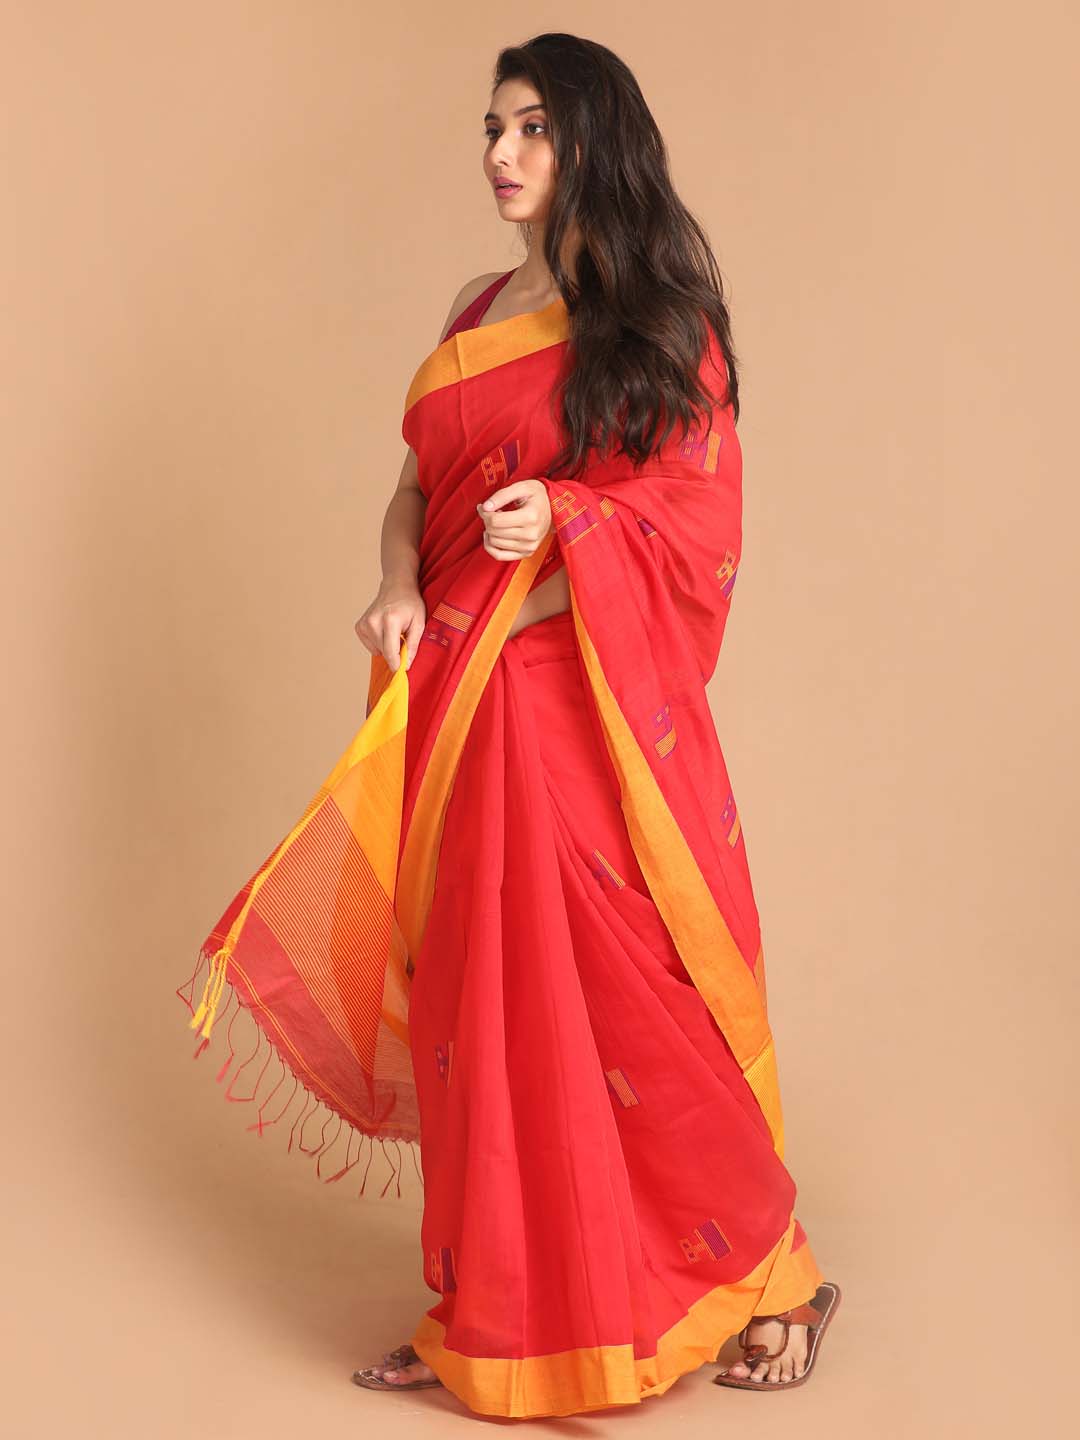 Indethnic Red Bengal Handloom Cotton Blend Work Saree - View 2